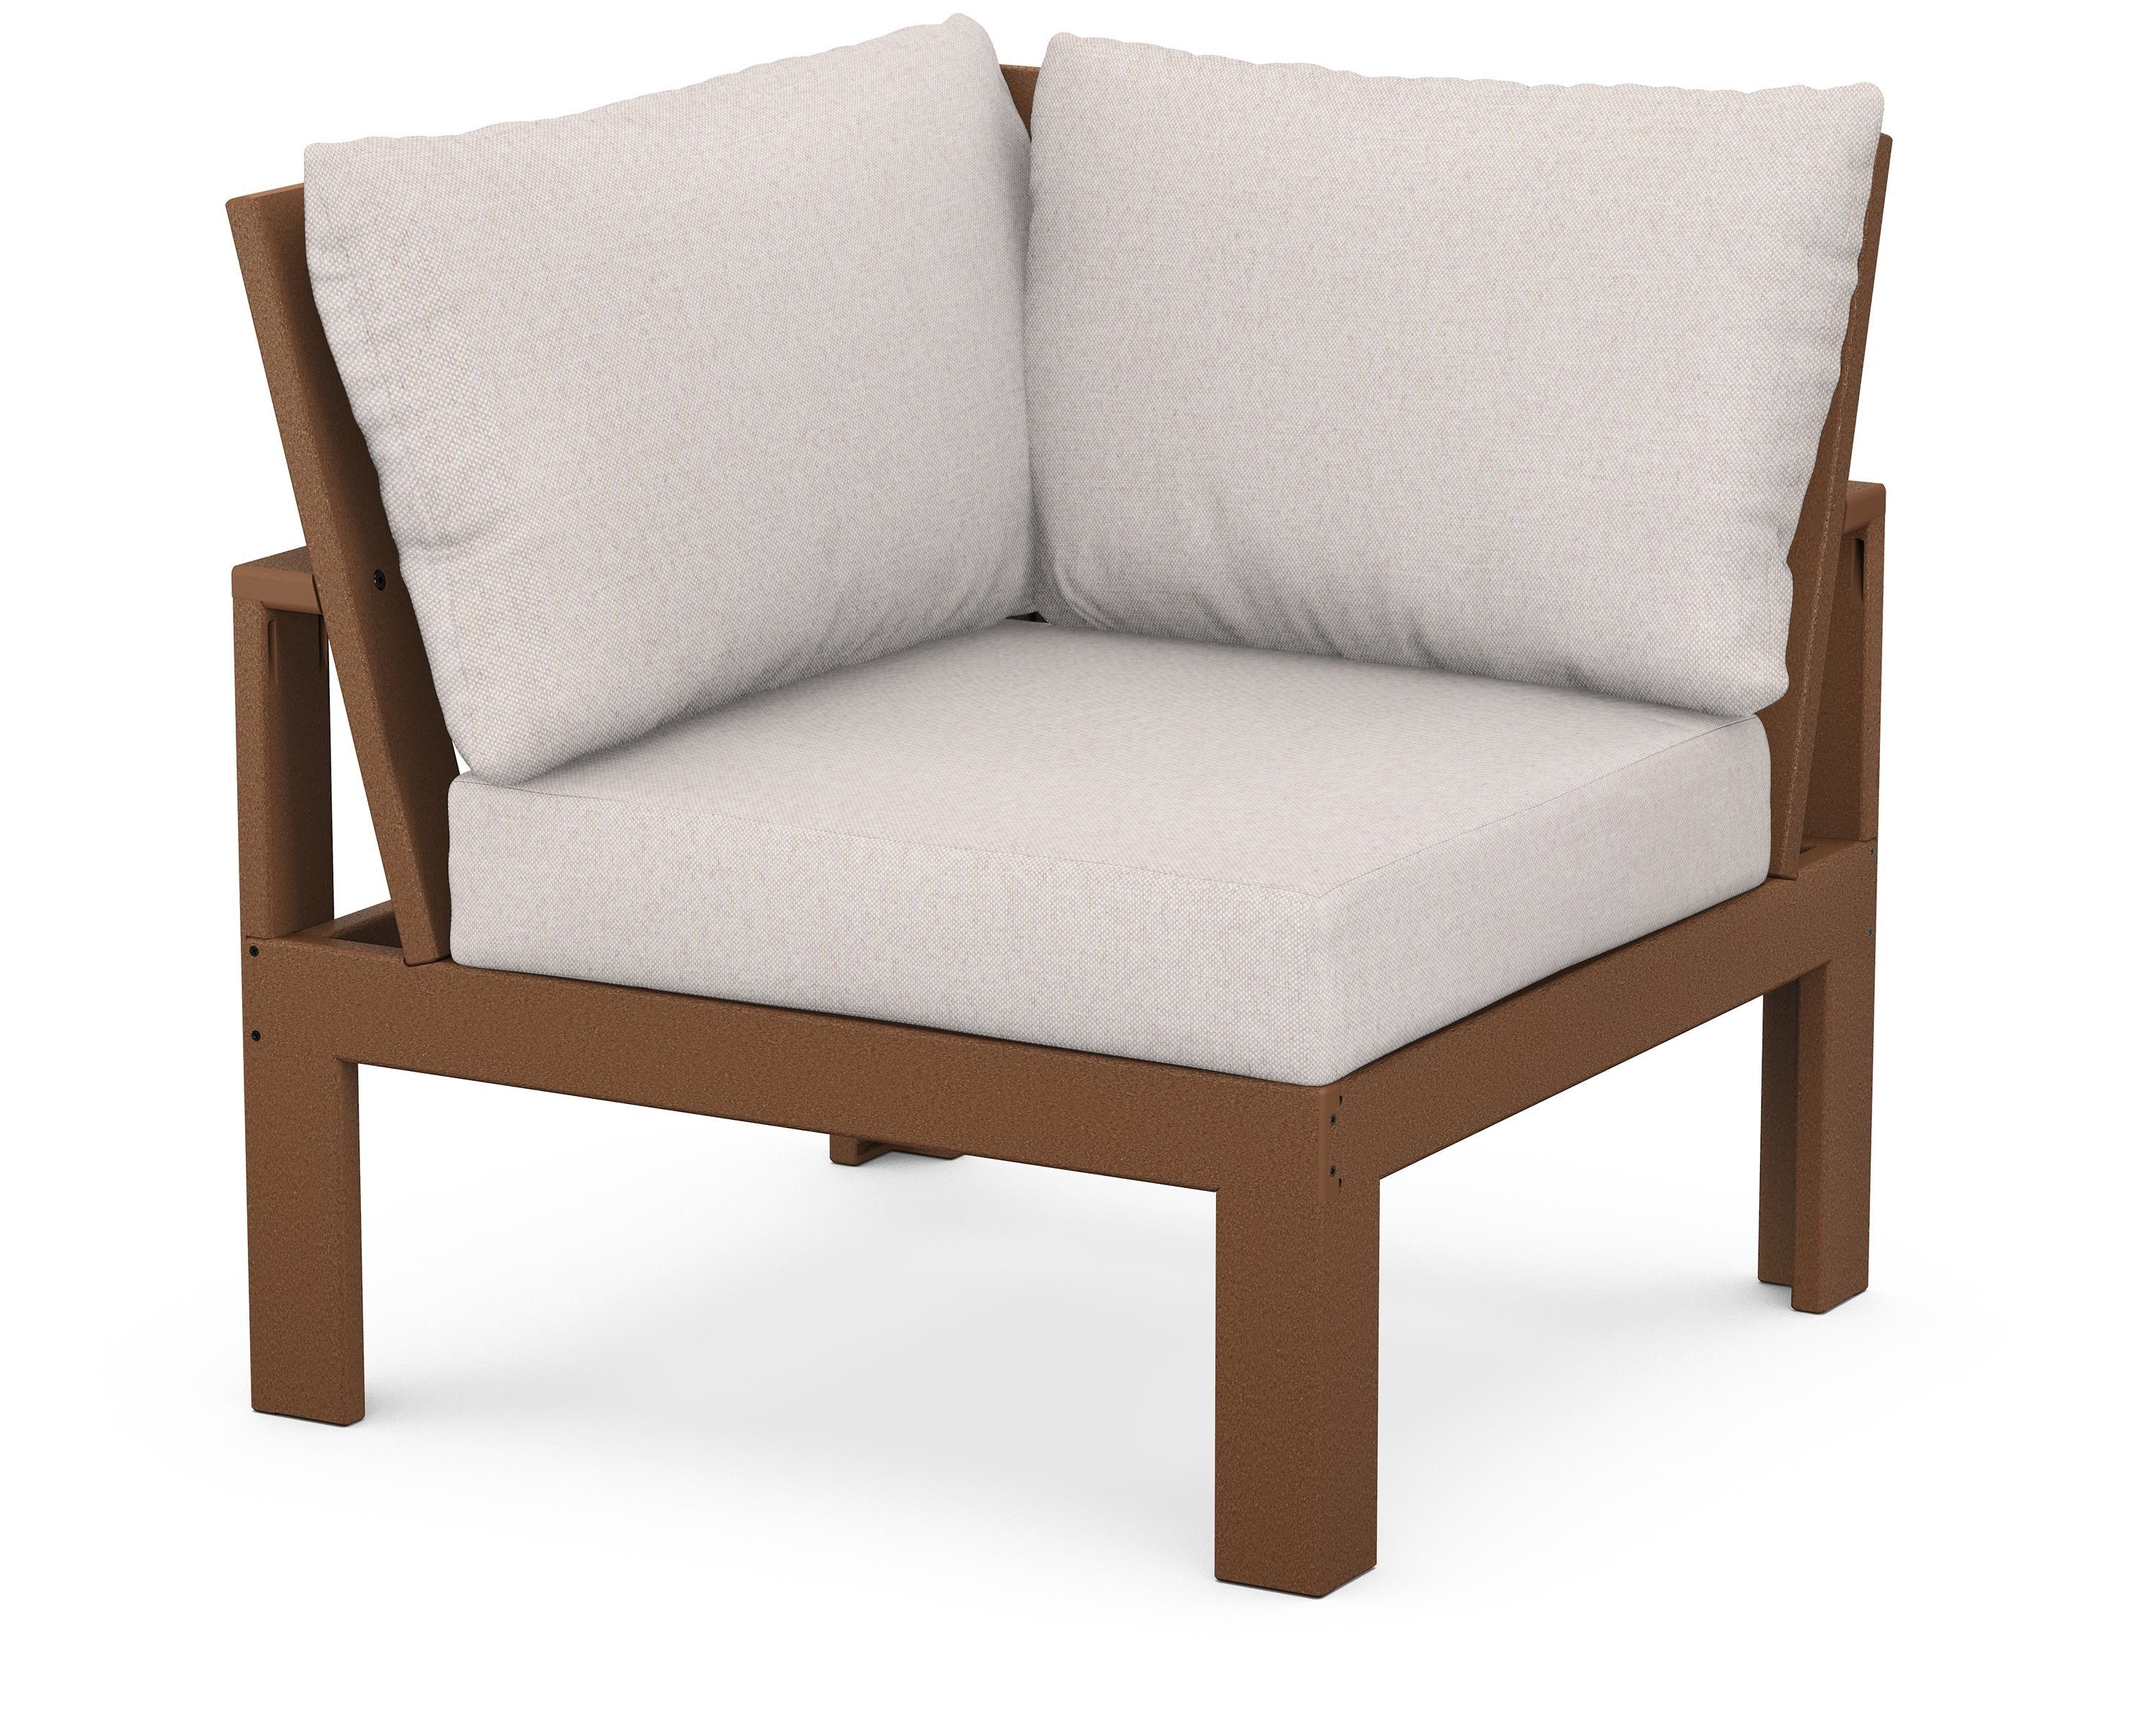 Trex Outdoor Furniture Modular Corner Chair